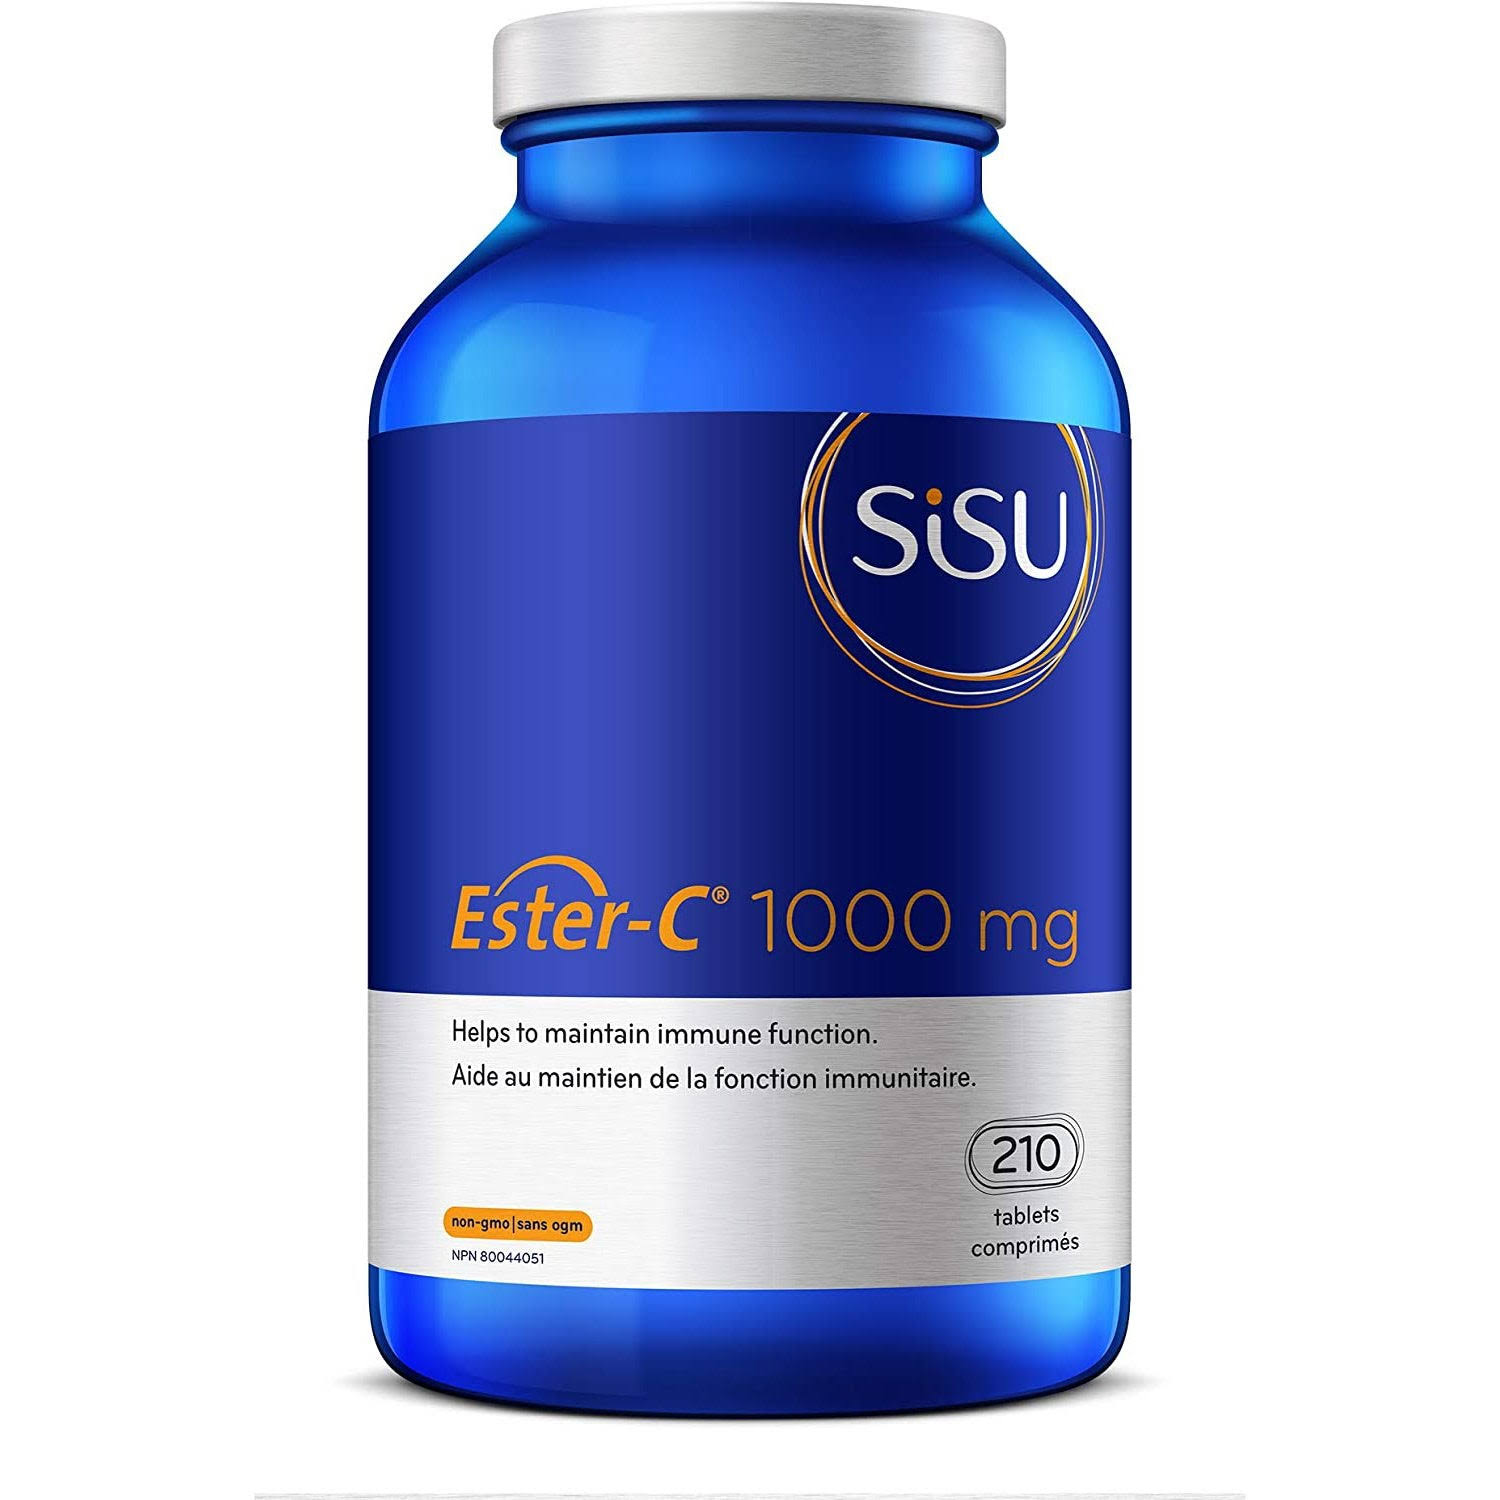 SISU - Ester-C 1000 mg 210 tablets